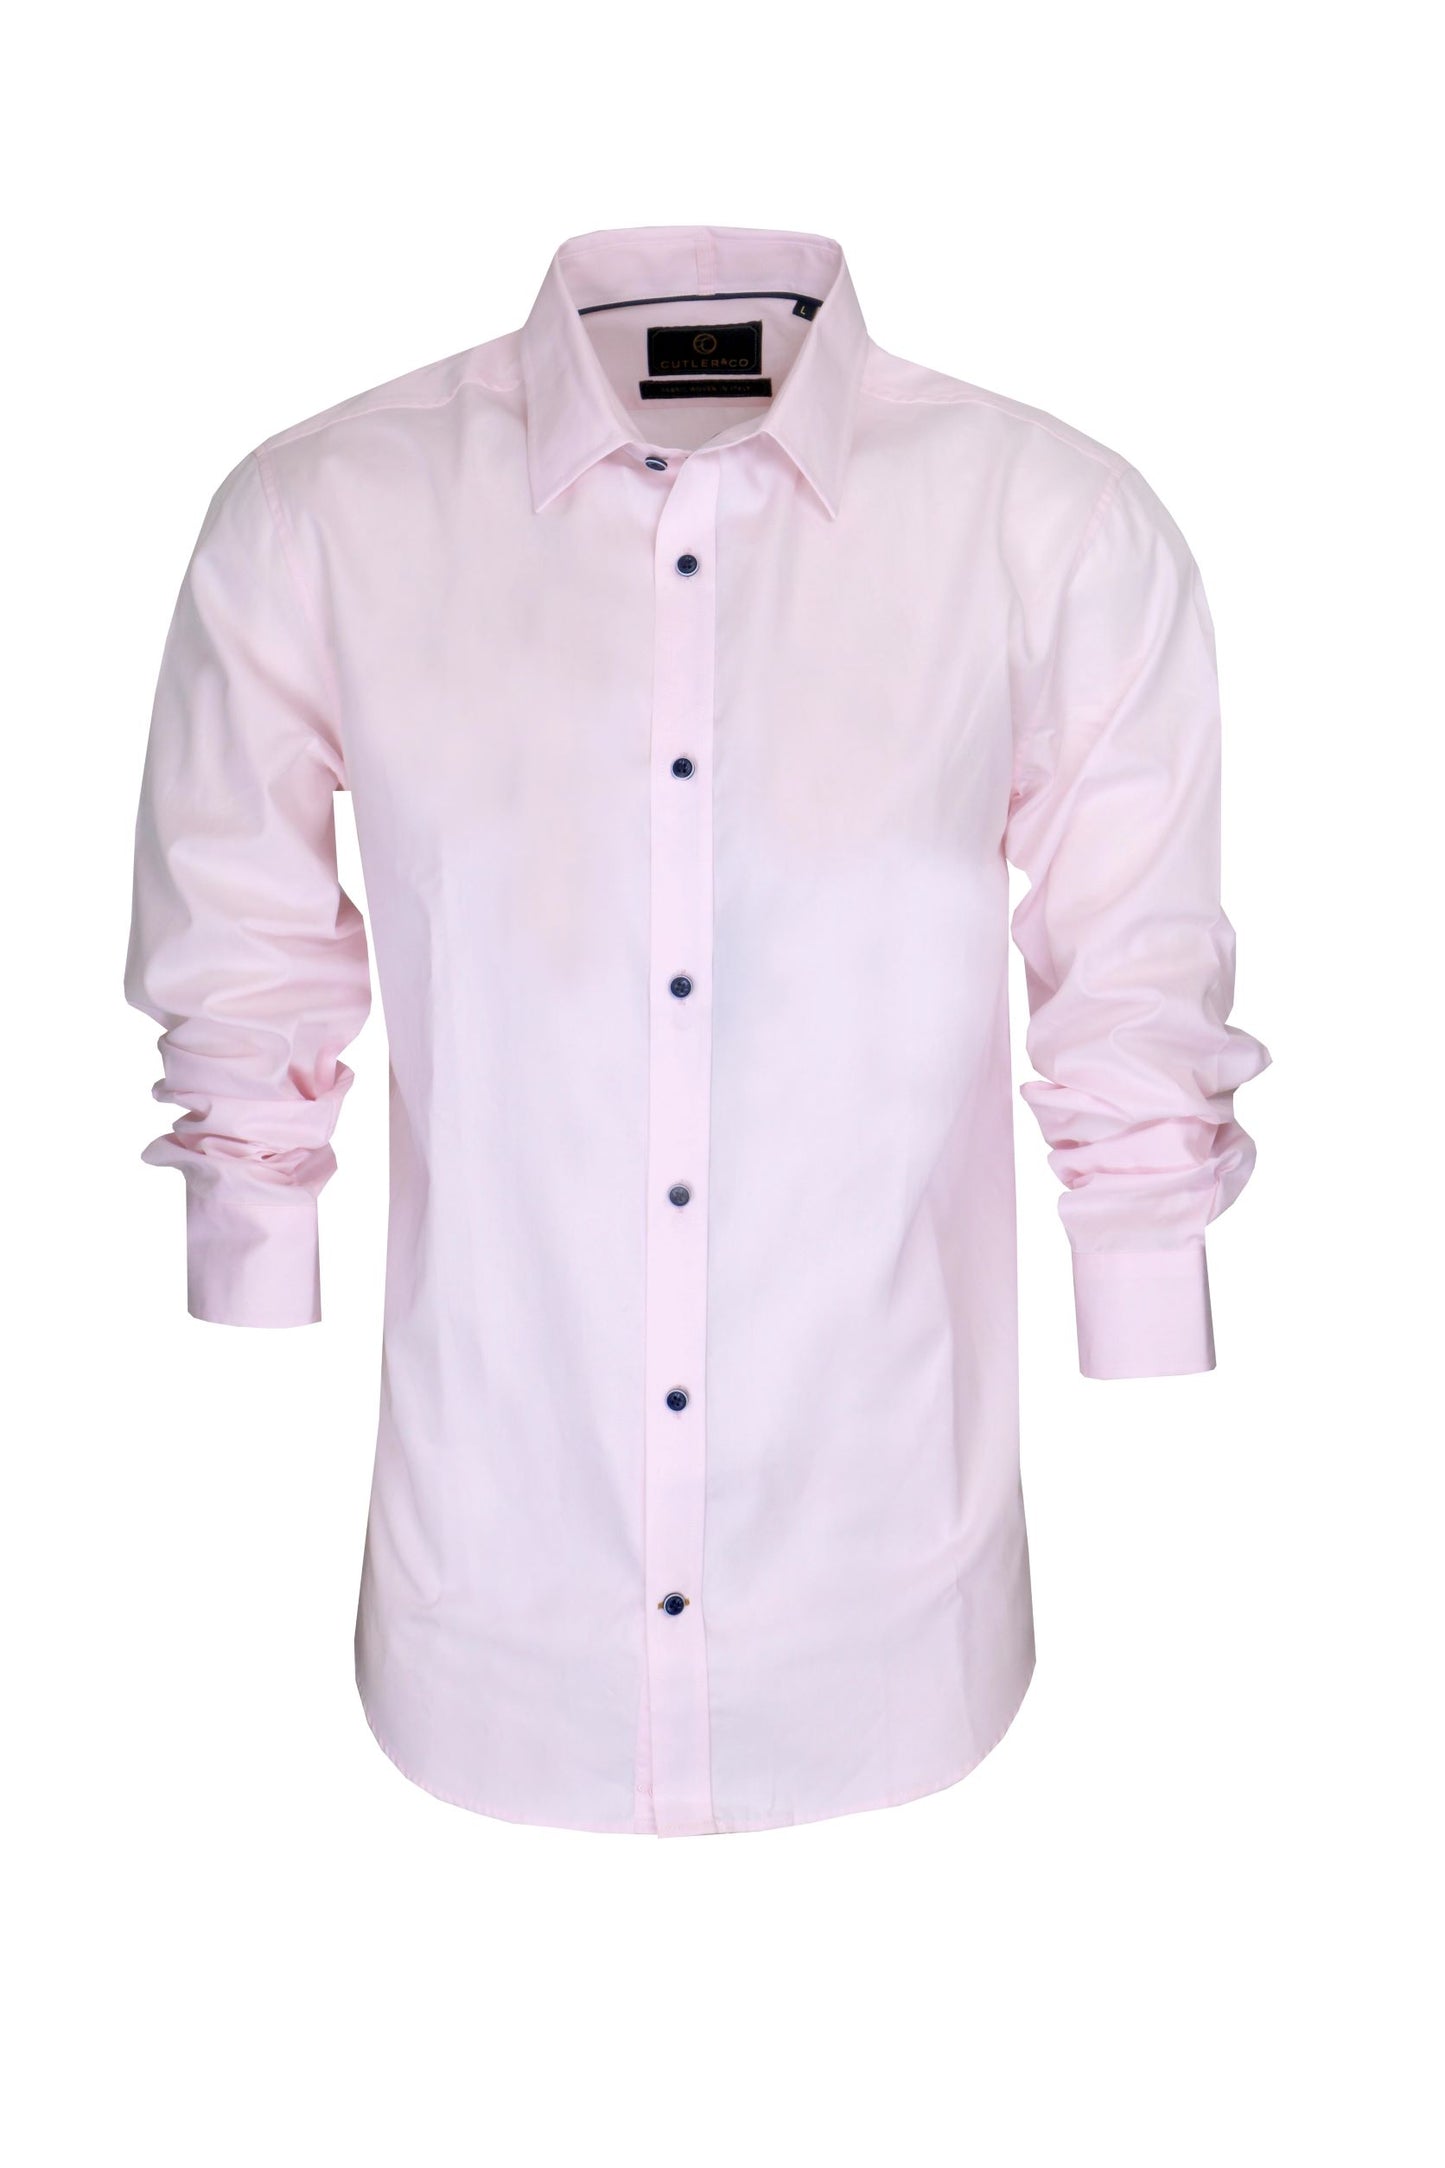 Cutler & Co Blaine L/S Shirt - Old Pink